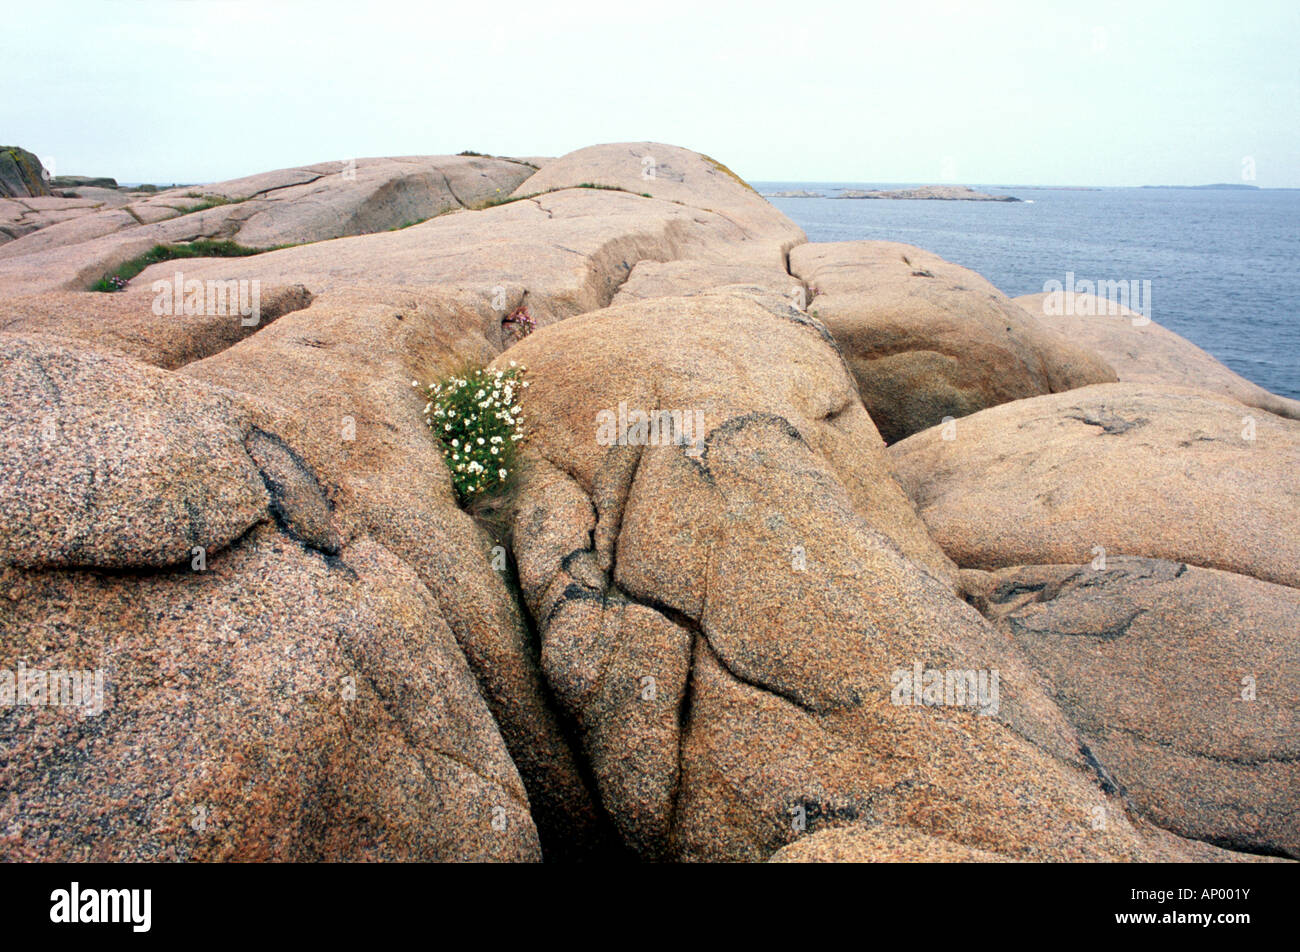 Clusters of flowers survive in crevices on this barren, windswept granite island, Vasholmarna (Vas islands), west coast, Sweden Stock Photo